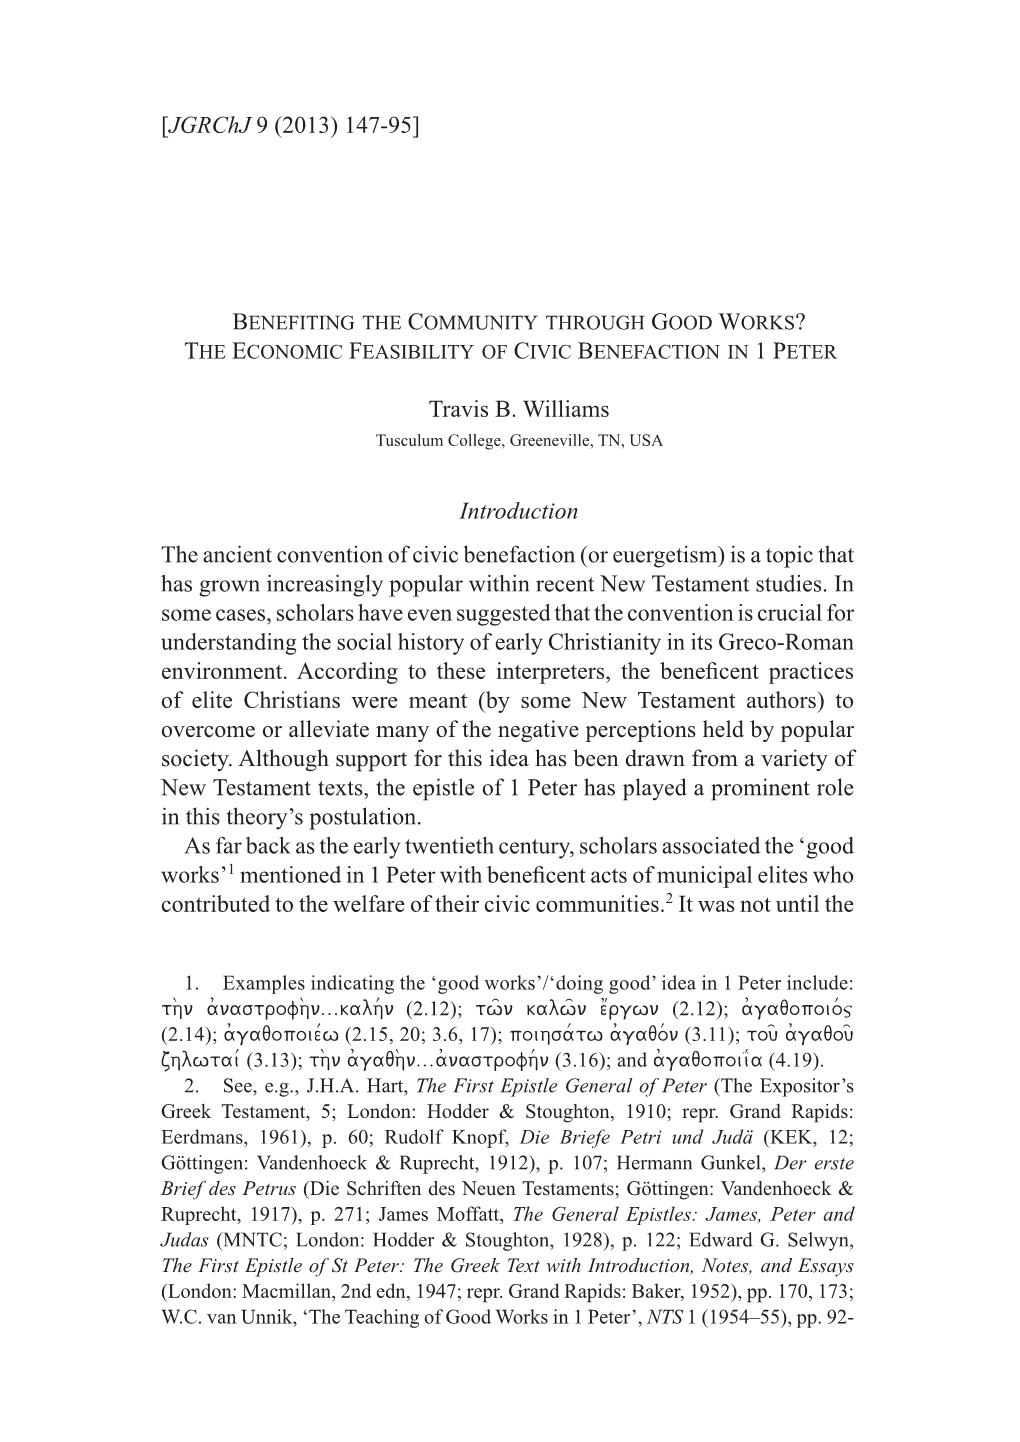 [Jgrchj 9 (2013) 147-95] Travis B. Williams Introduction the Ancient